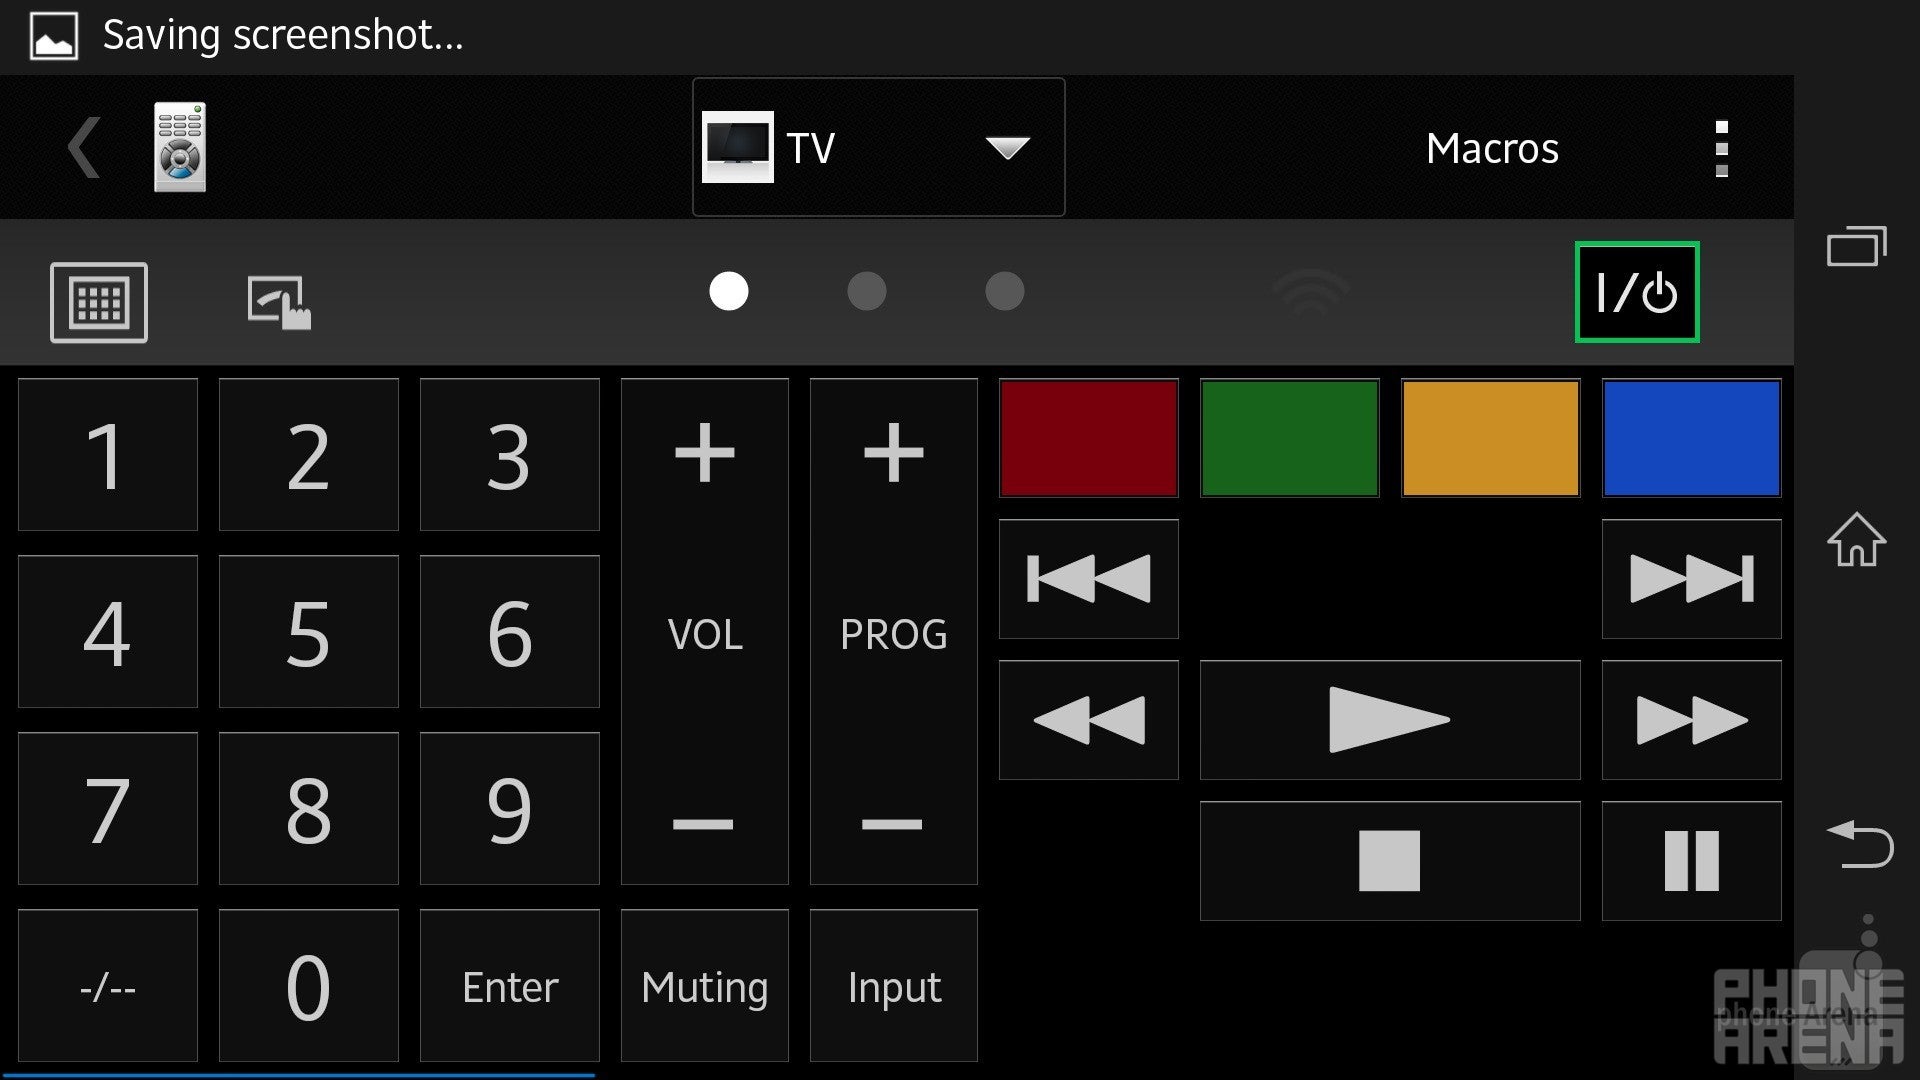 Remote control - Sony Xperia ZL Review